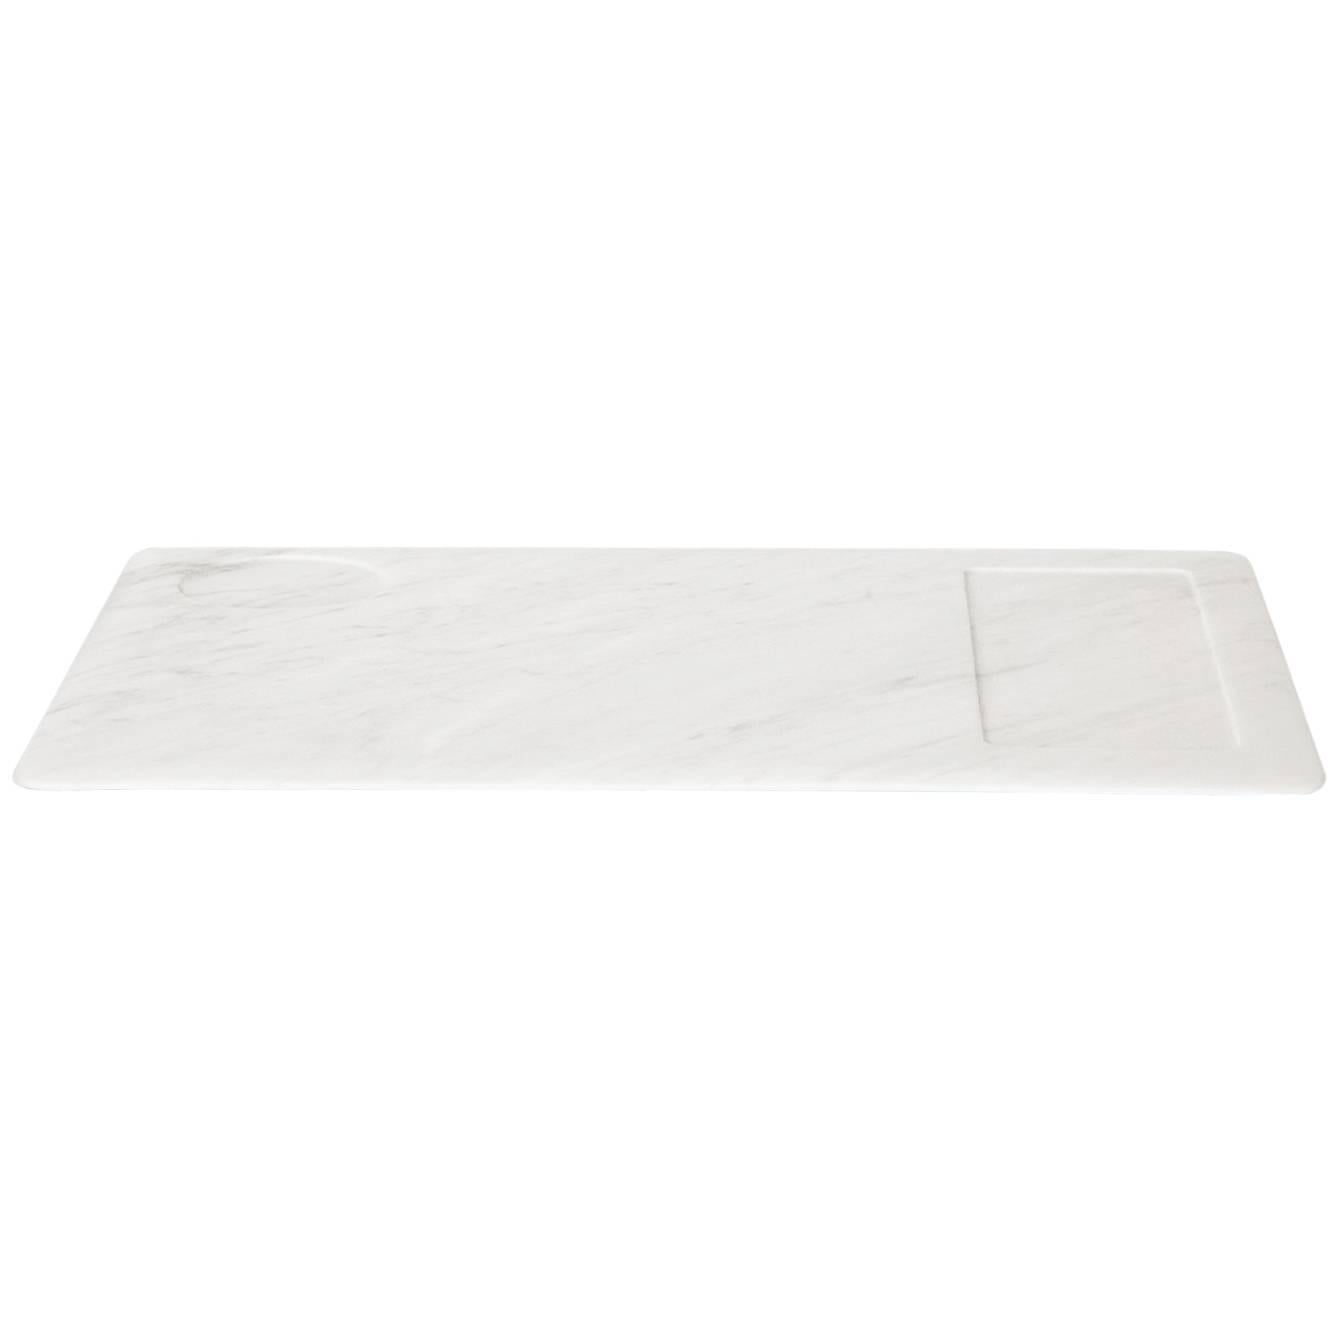 Tray in White Carrara Marble by Studioformart, Italy